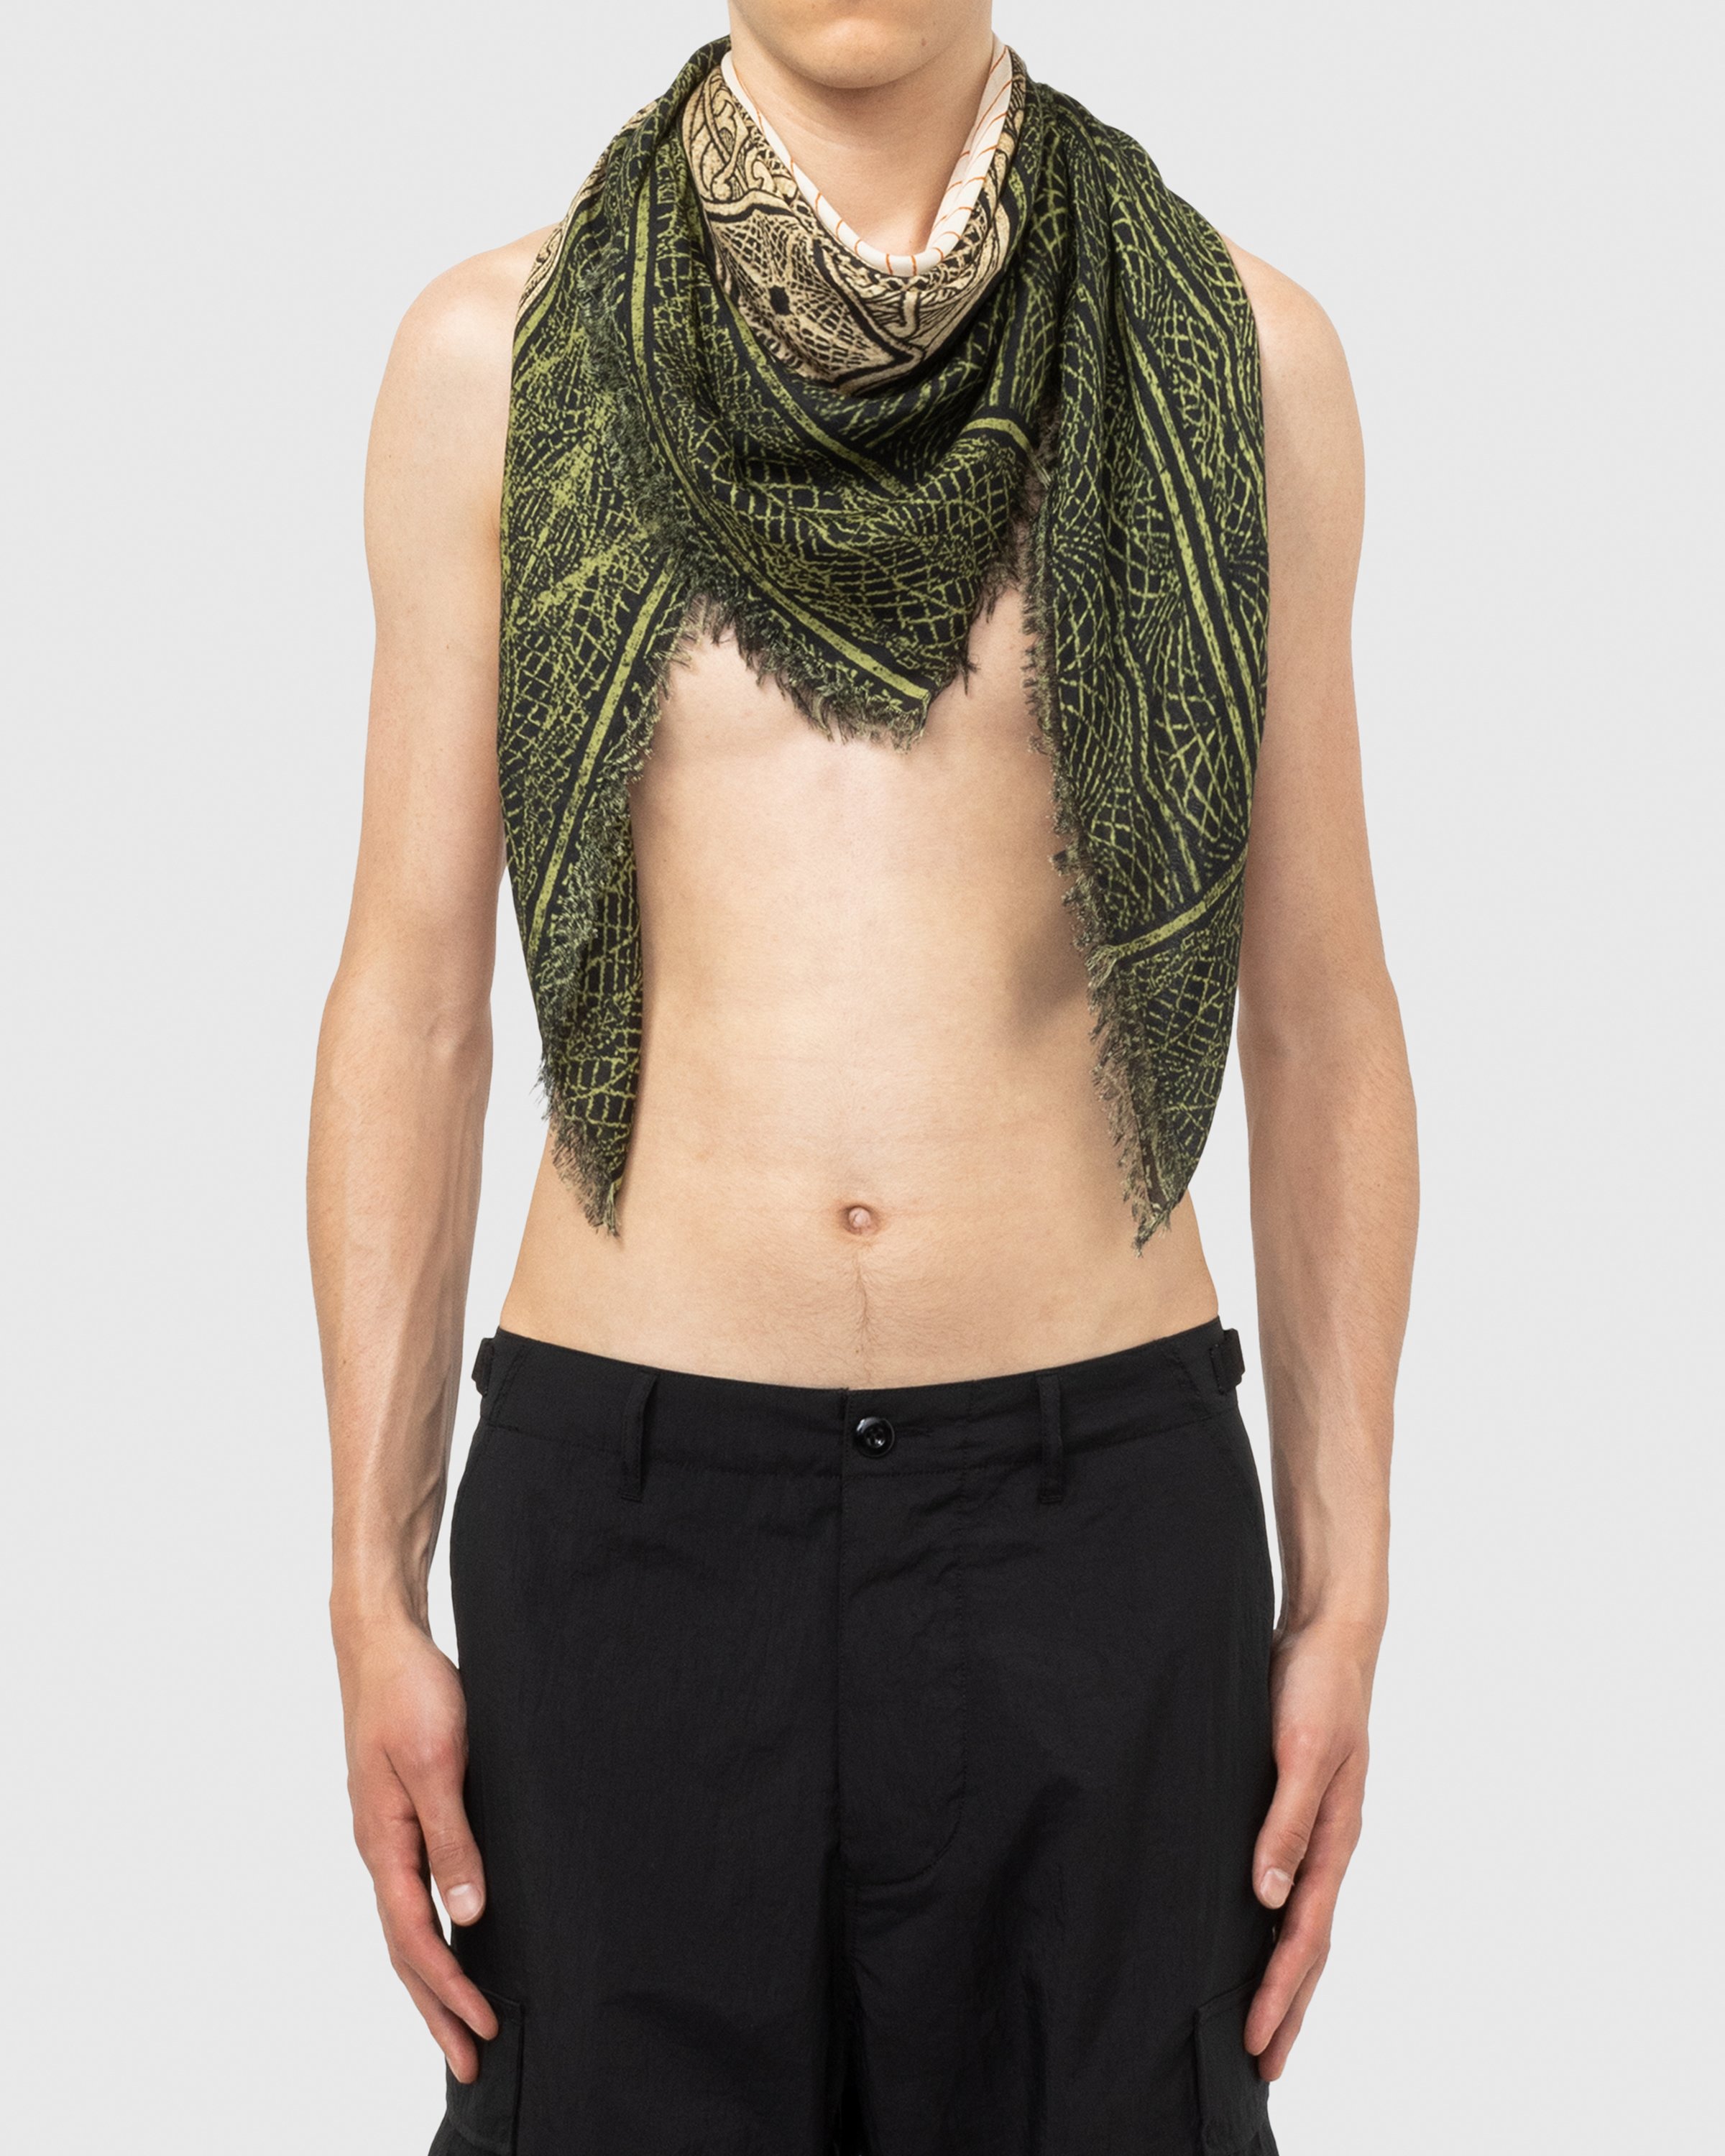 Jean Paul Gaultier - Cartouche Scarf Green/Ecru/Black/Orange - Accessories - Green - Image 8